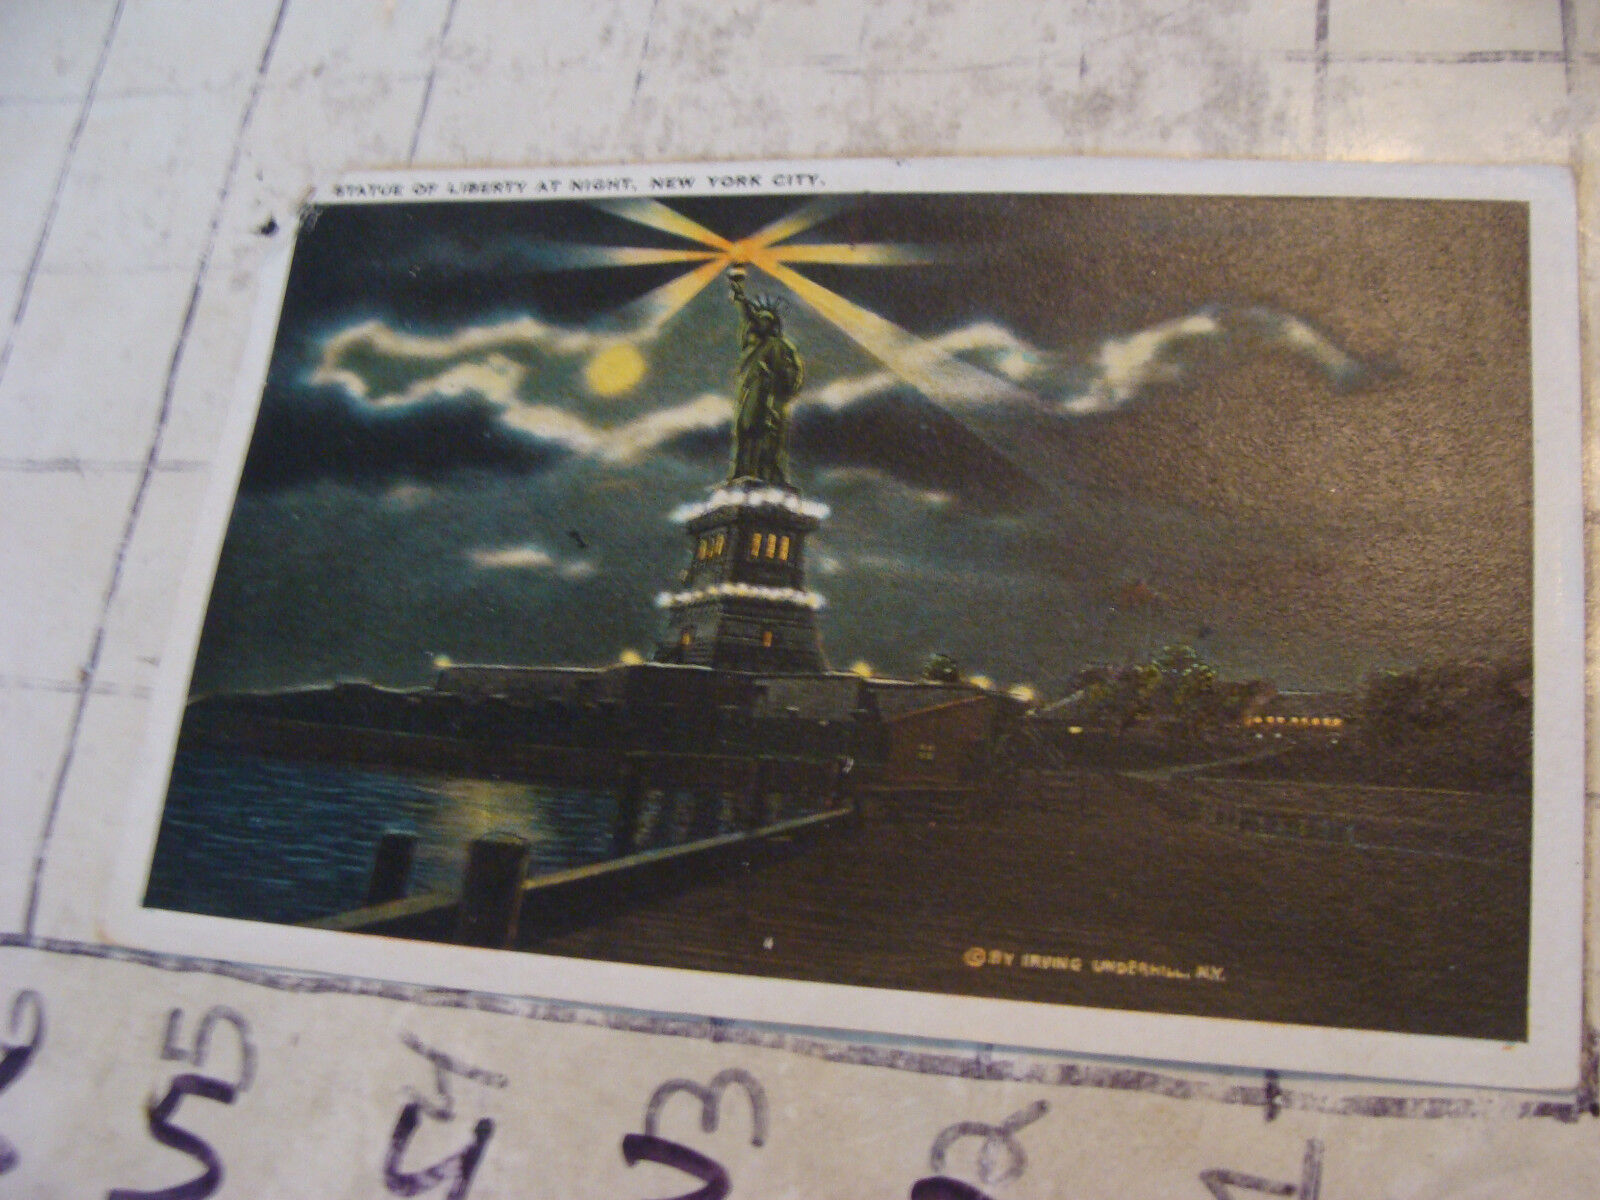 Orig Vint post card EARLY STATUE OF LIBERTY NY CITY AT NIGHT